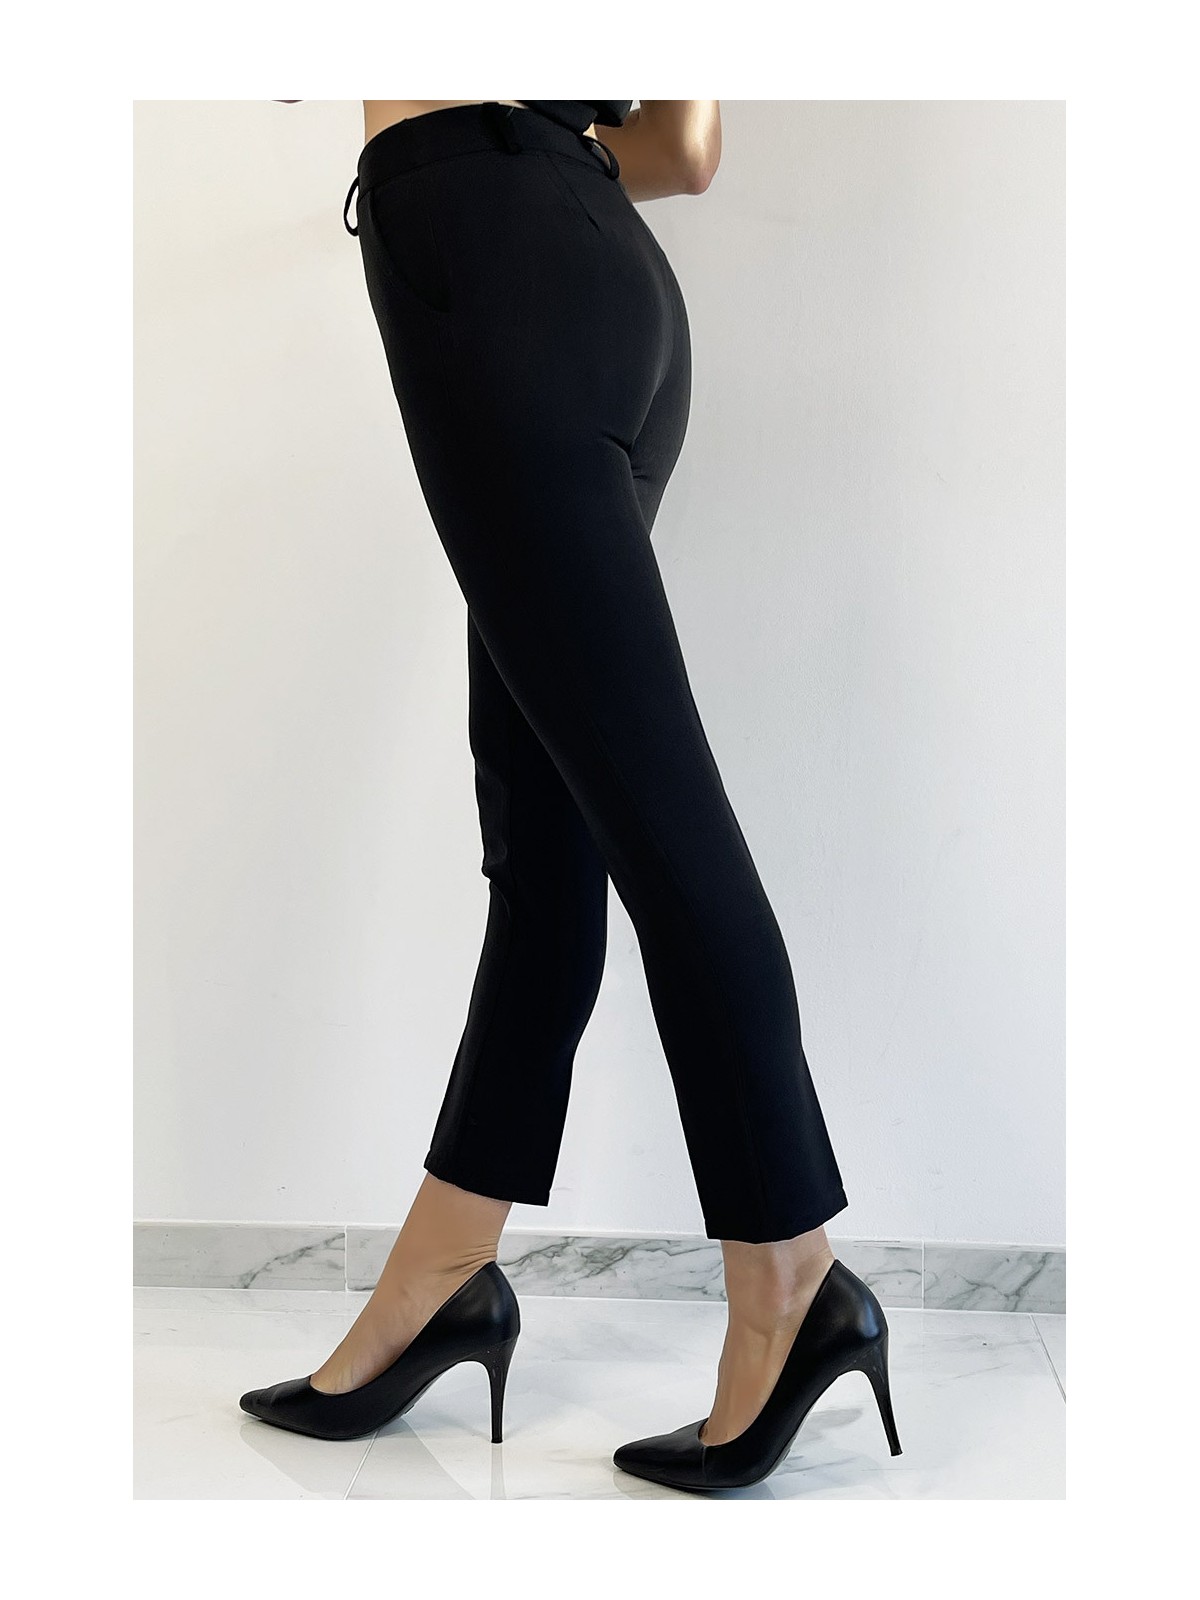 Pantalon slim noir avec poches style working girl - 1